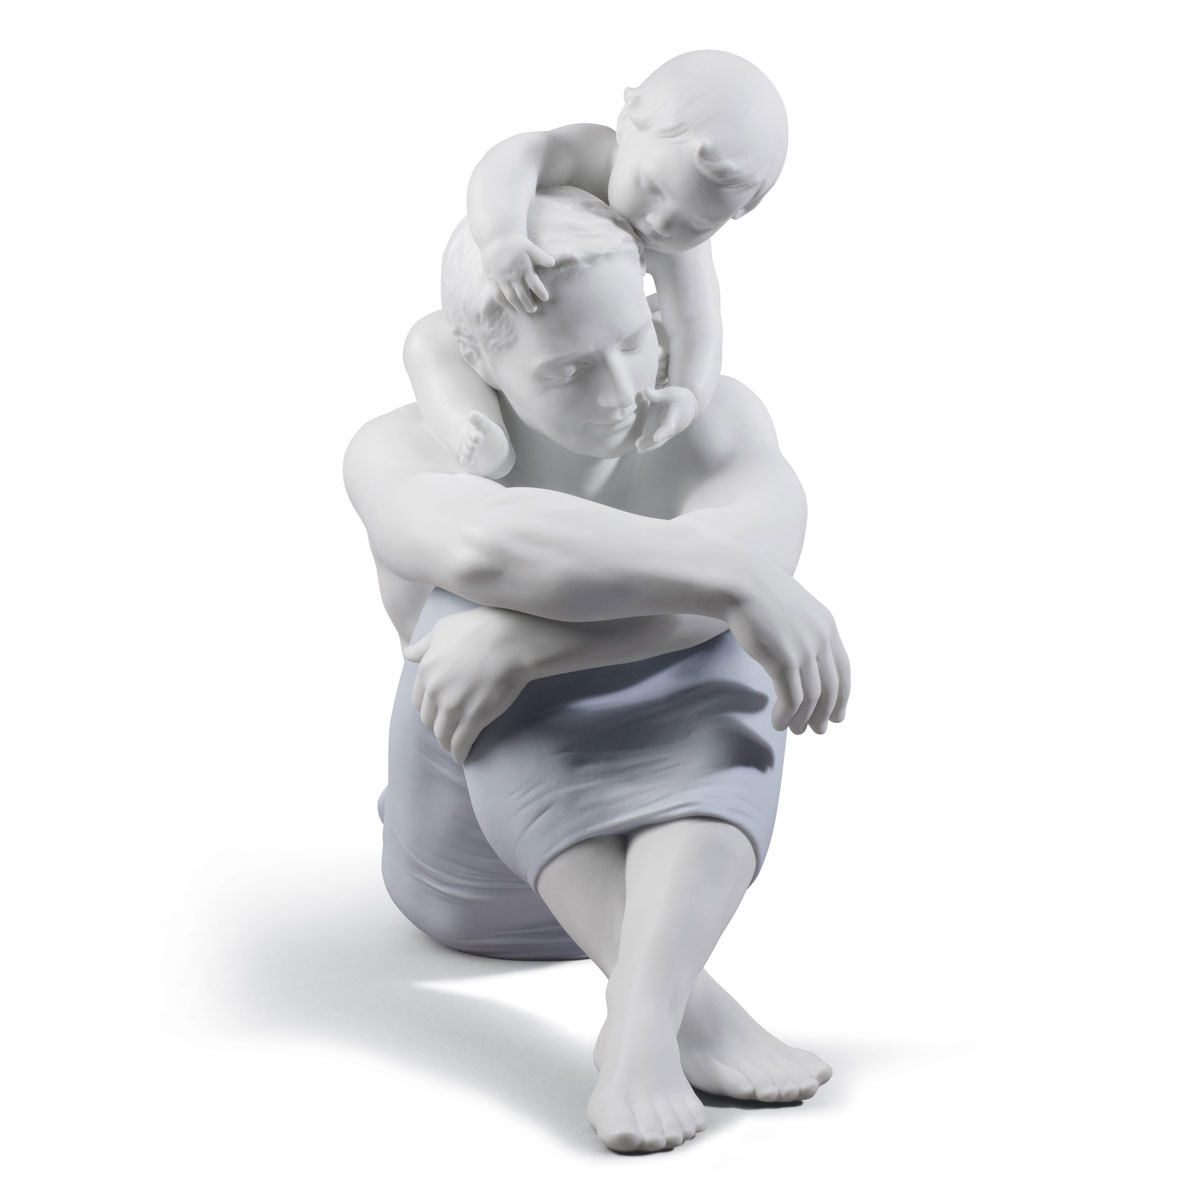 Lladro Classic Sculpture, I Love You Dad Figurine